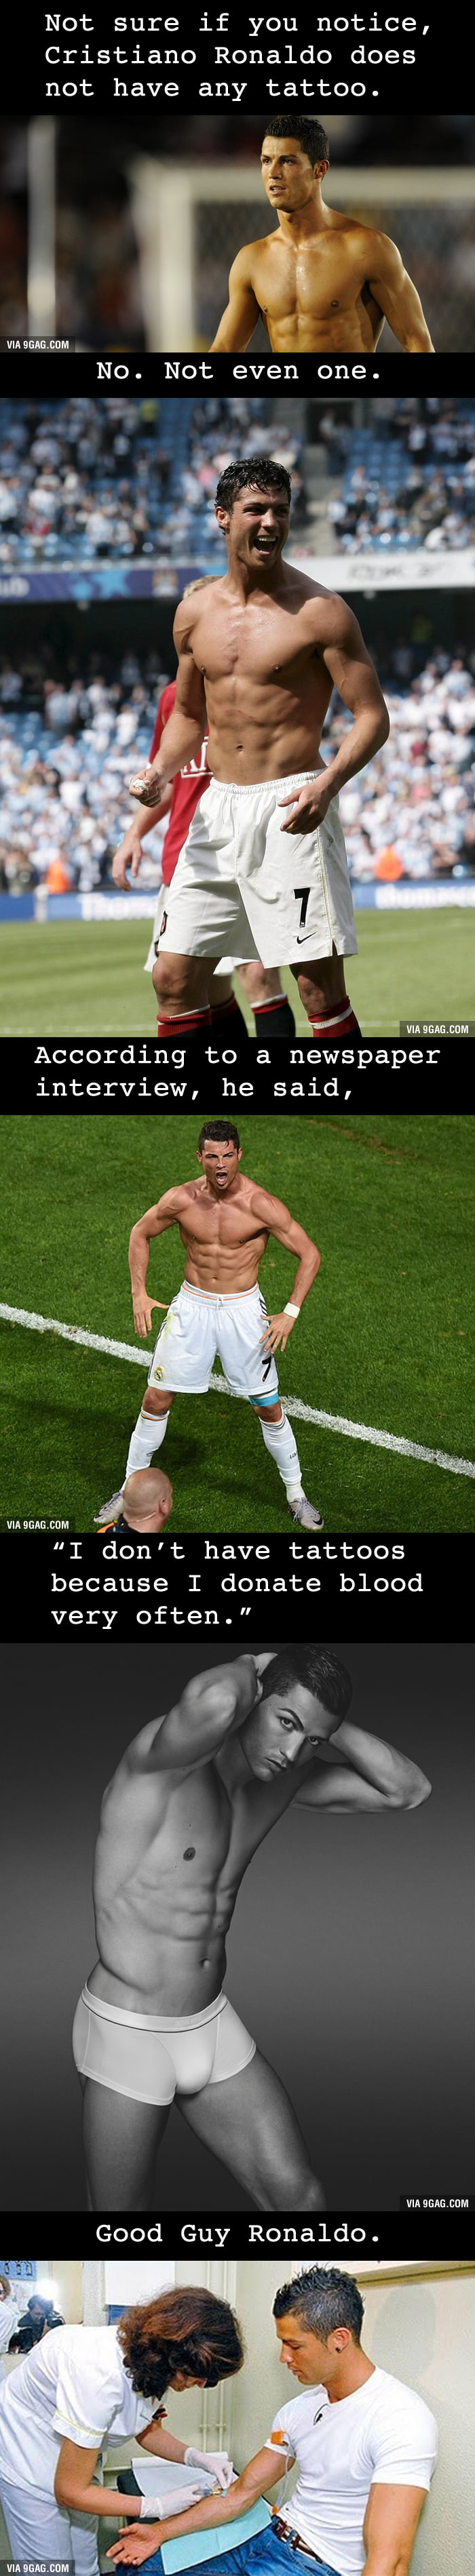 Mystery unveiled: of Cristiano Ronaldo tattoo